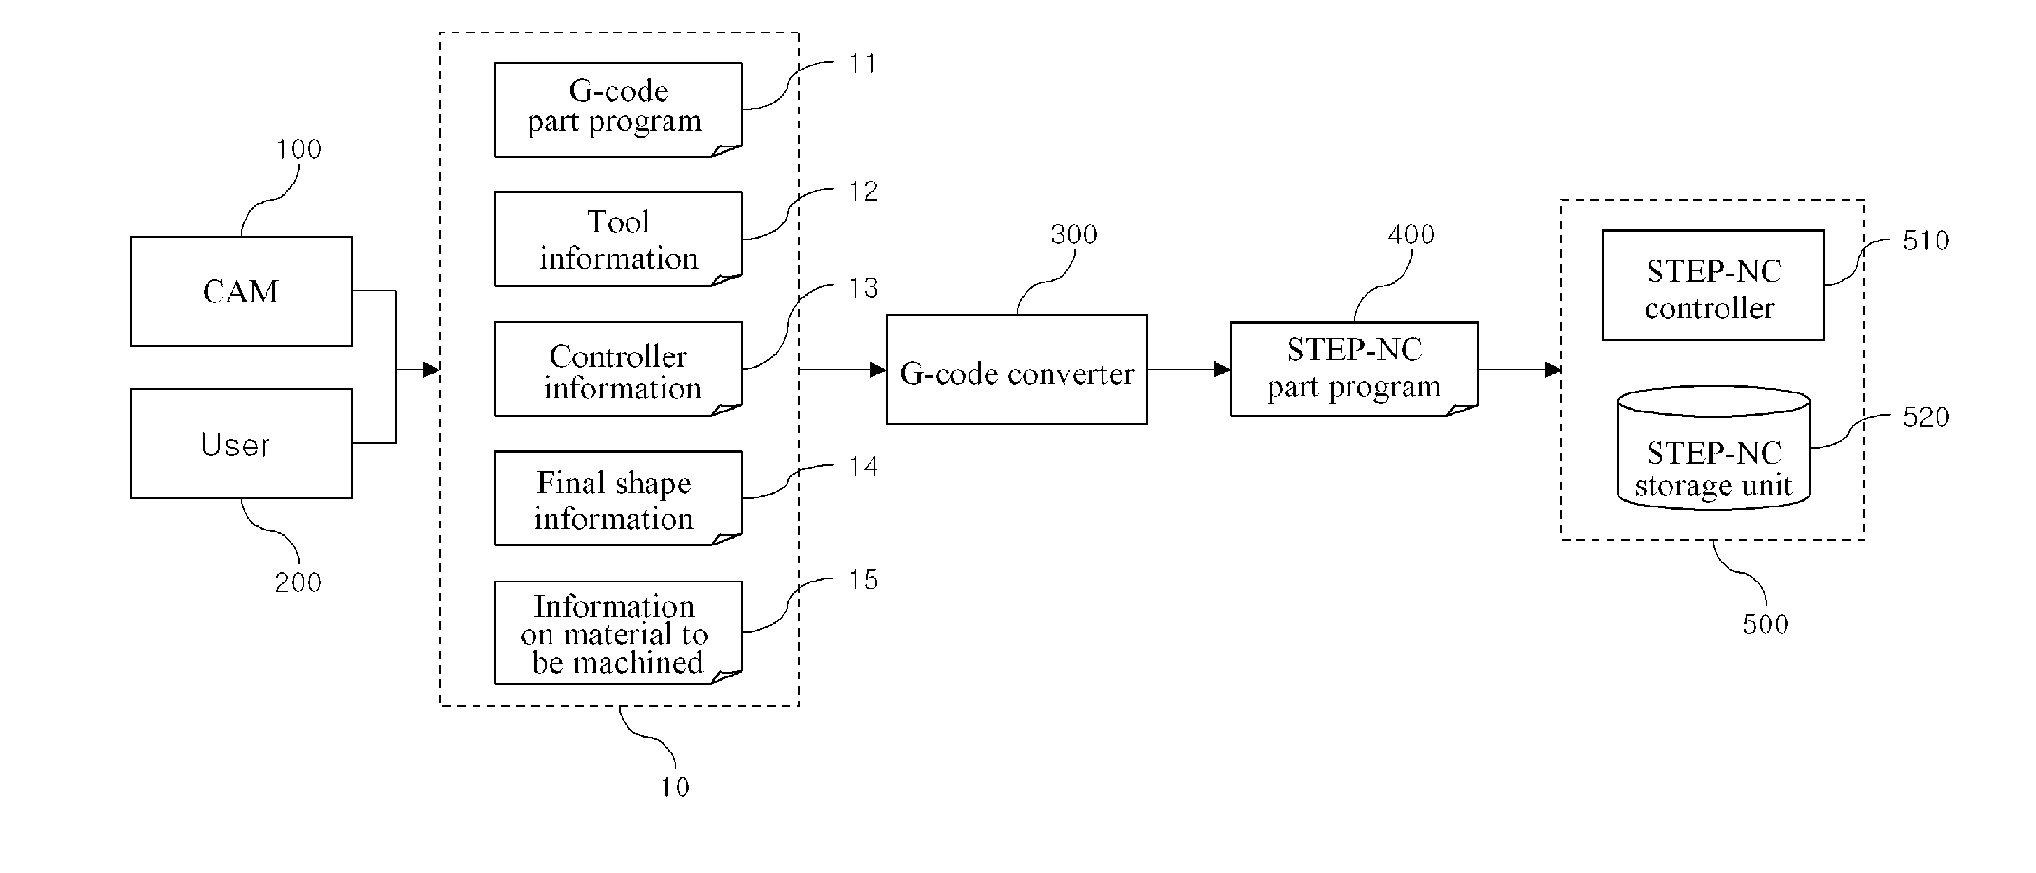 Transformation Method Of G-Code Into Step-Nc Part Program